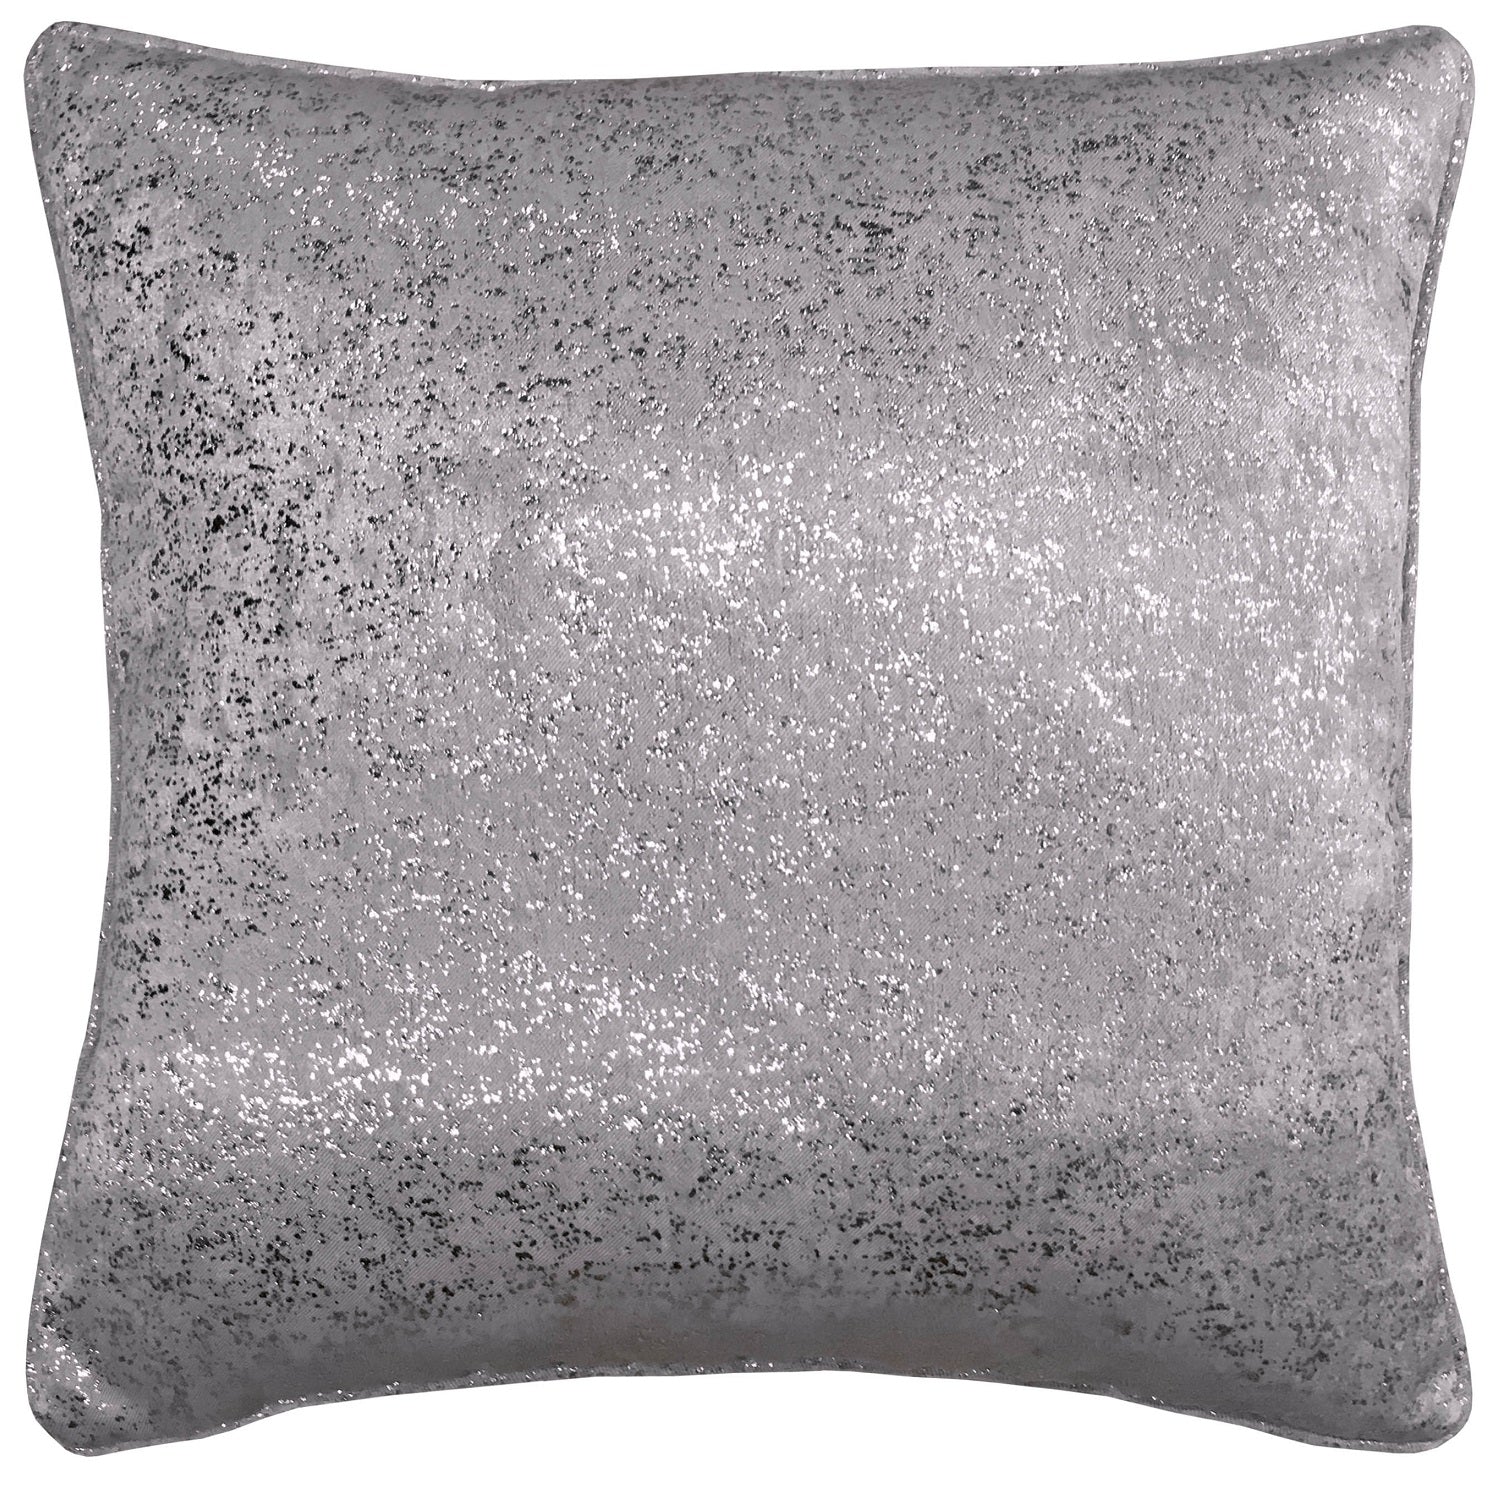 17" Silver Grey Glitter Sparkle Cushion Cover